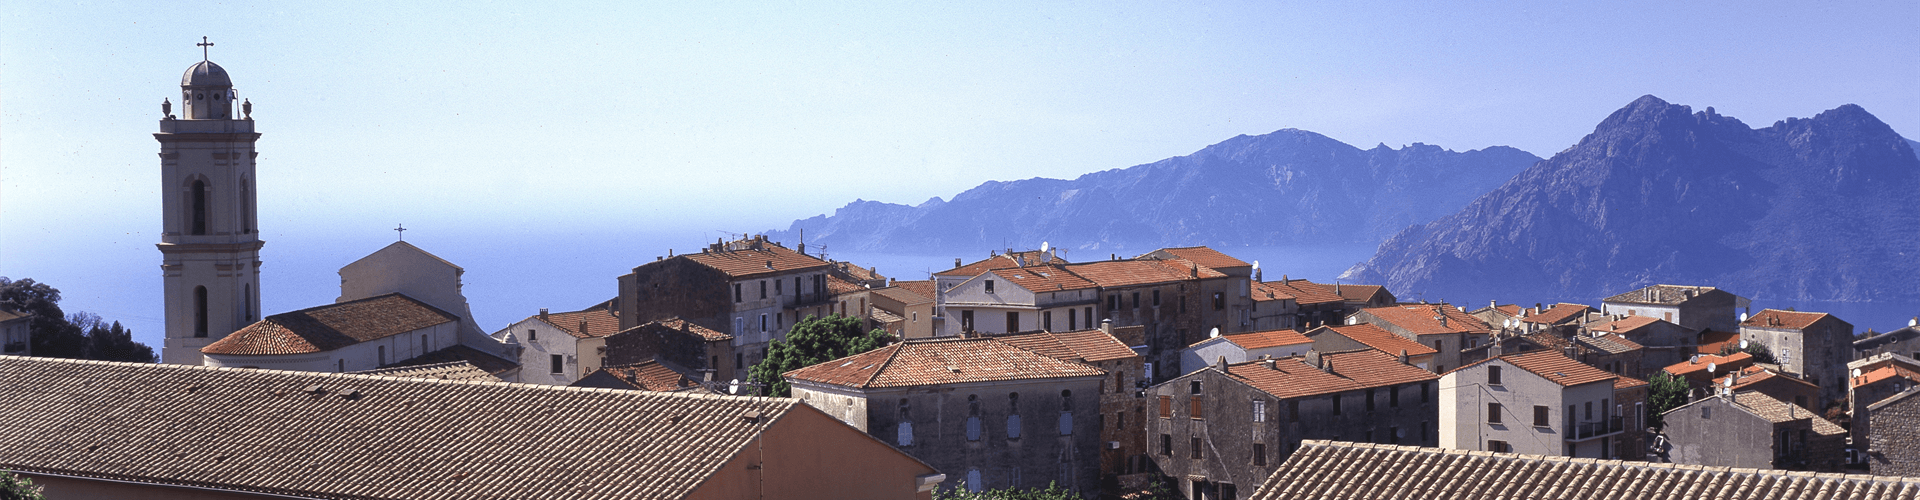 Steden en dorpen op Corsica; Piana